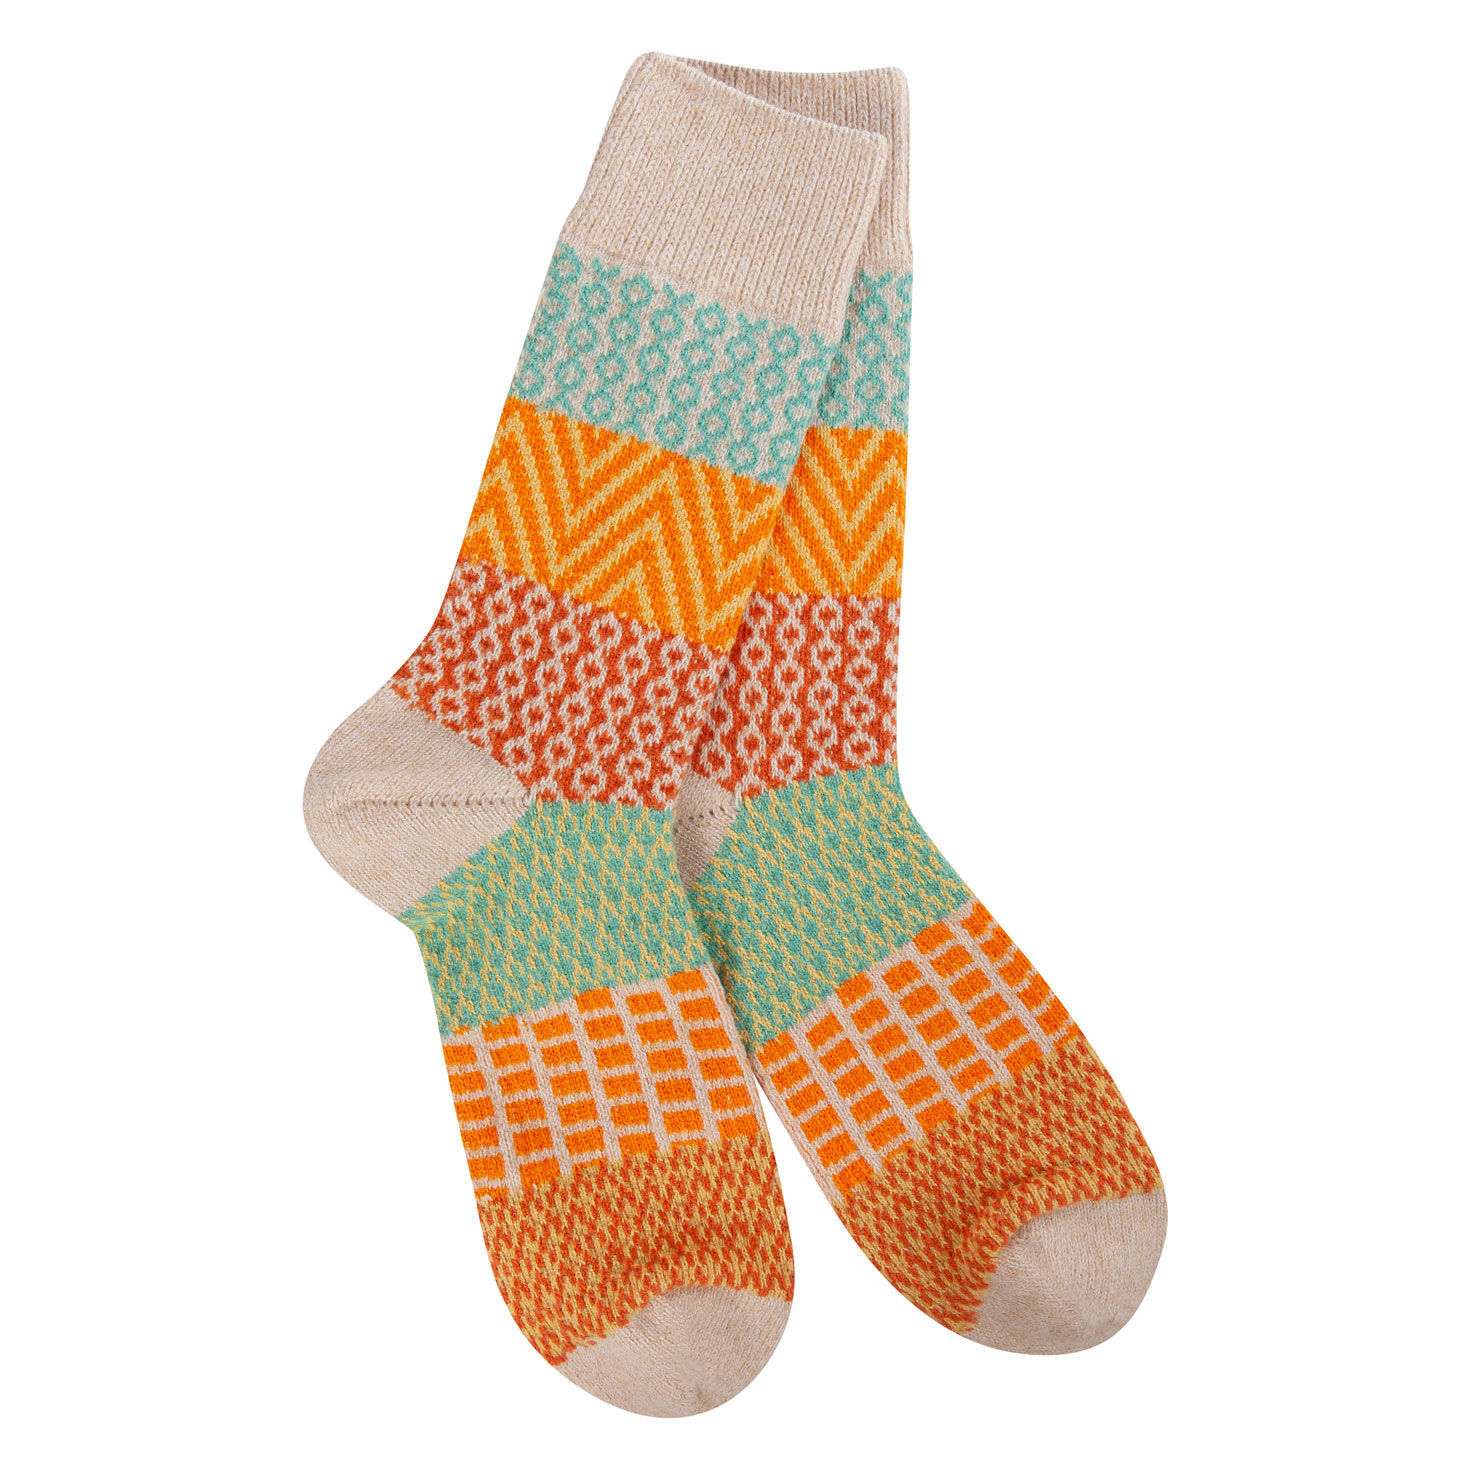 Crescent Sock Company Wheat Gallery Crew Socks for only USD 14.99 | Hallmark